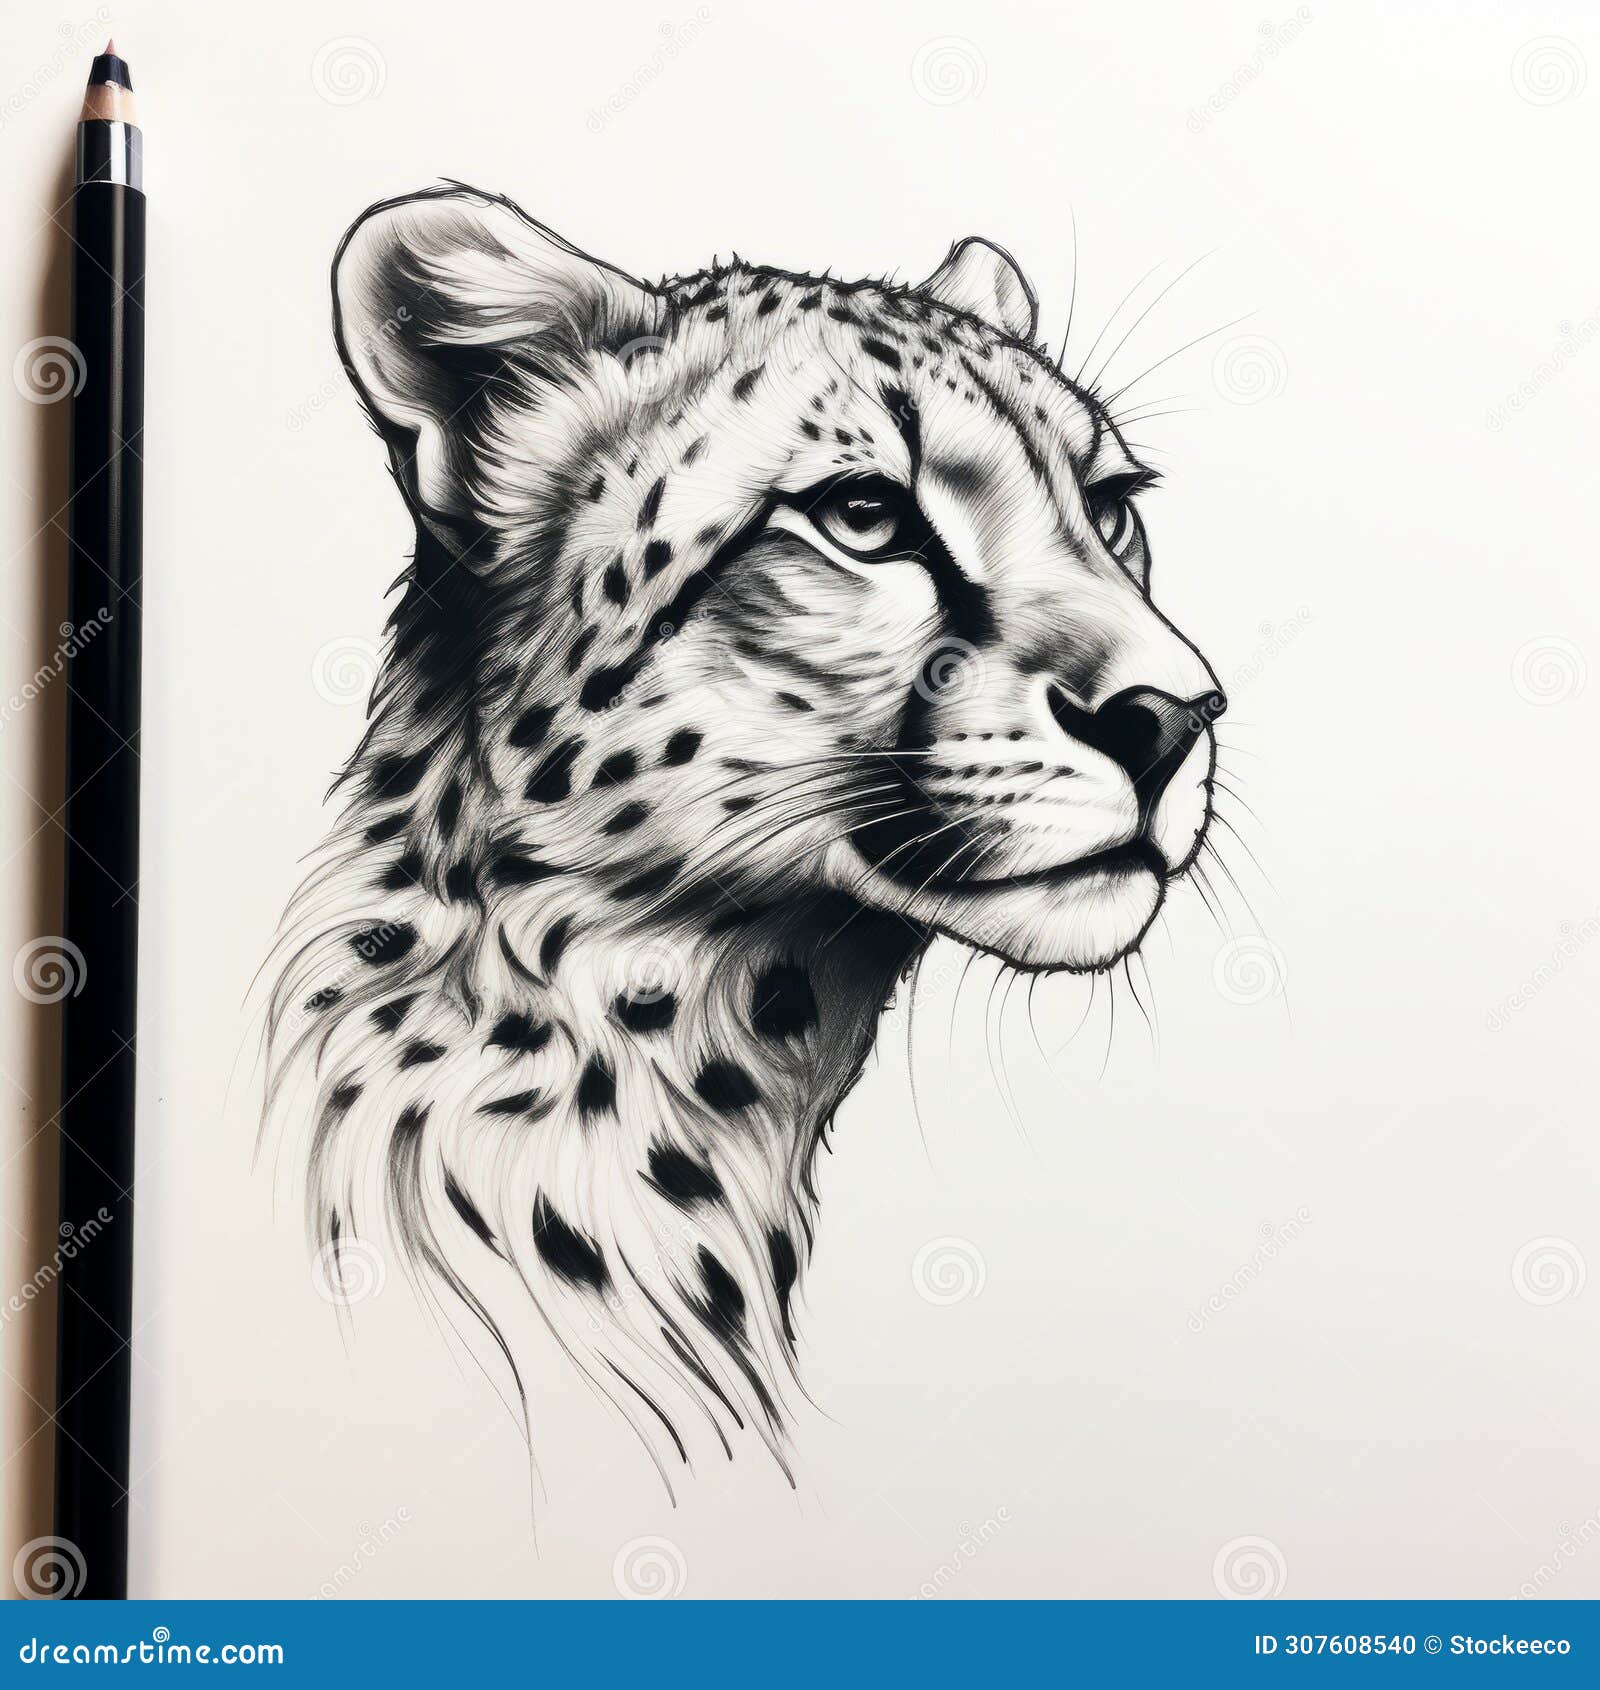 Cheetah Sketch by Aki-rain on DeviantArt